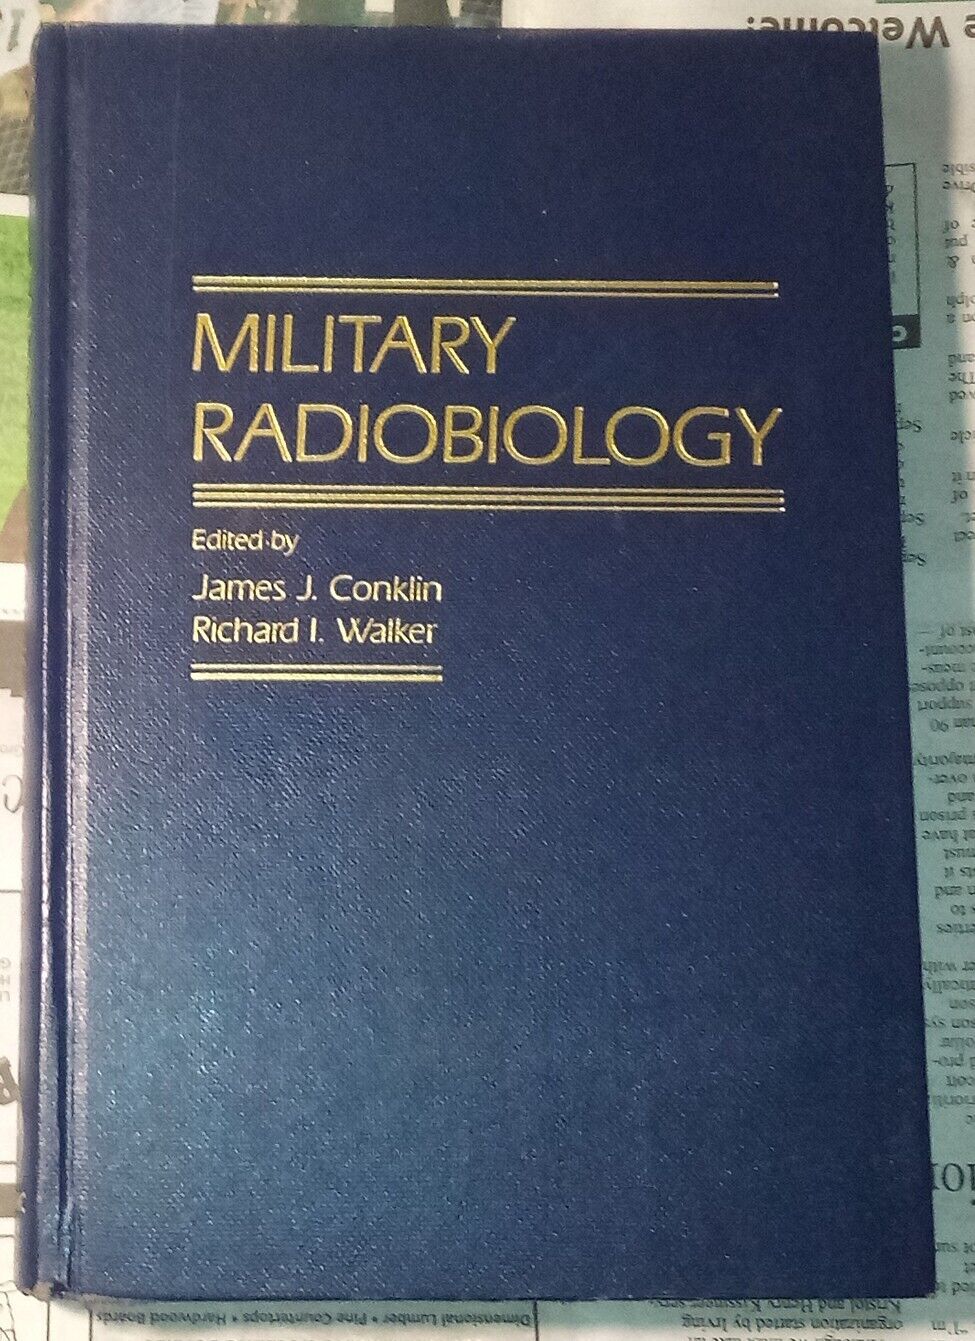 Military Radiobiology - Conklin - Walker - 1987